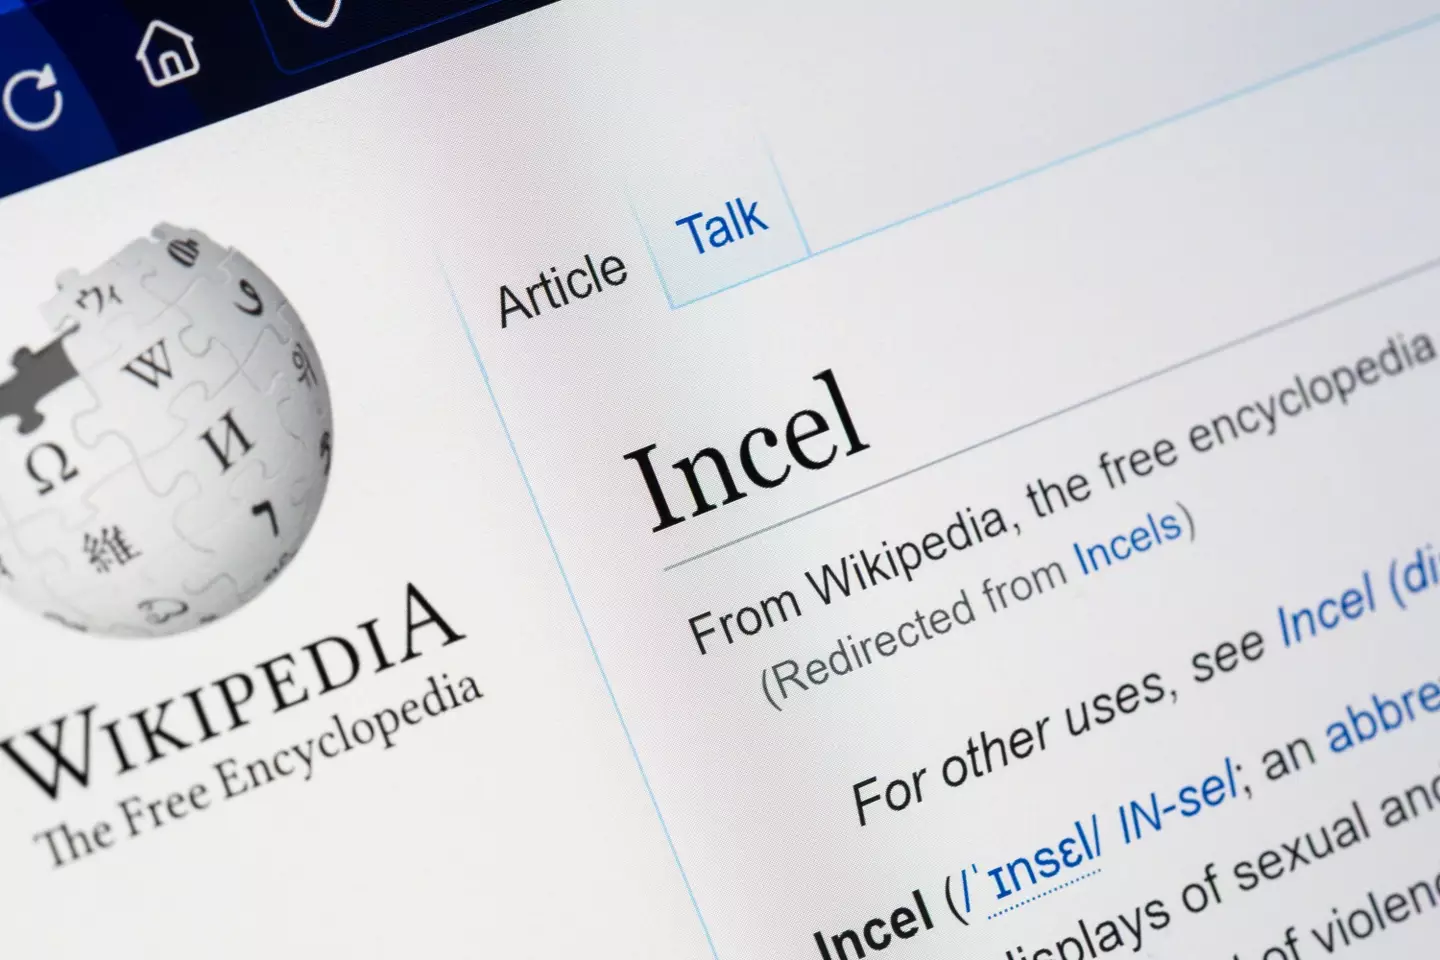 Incels share the disturbing ideology online.